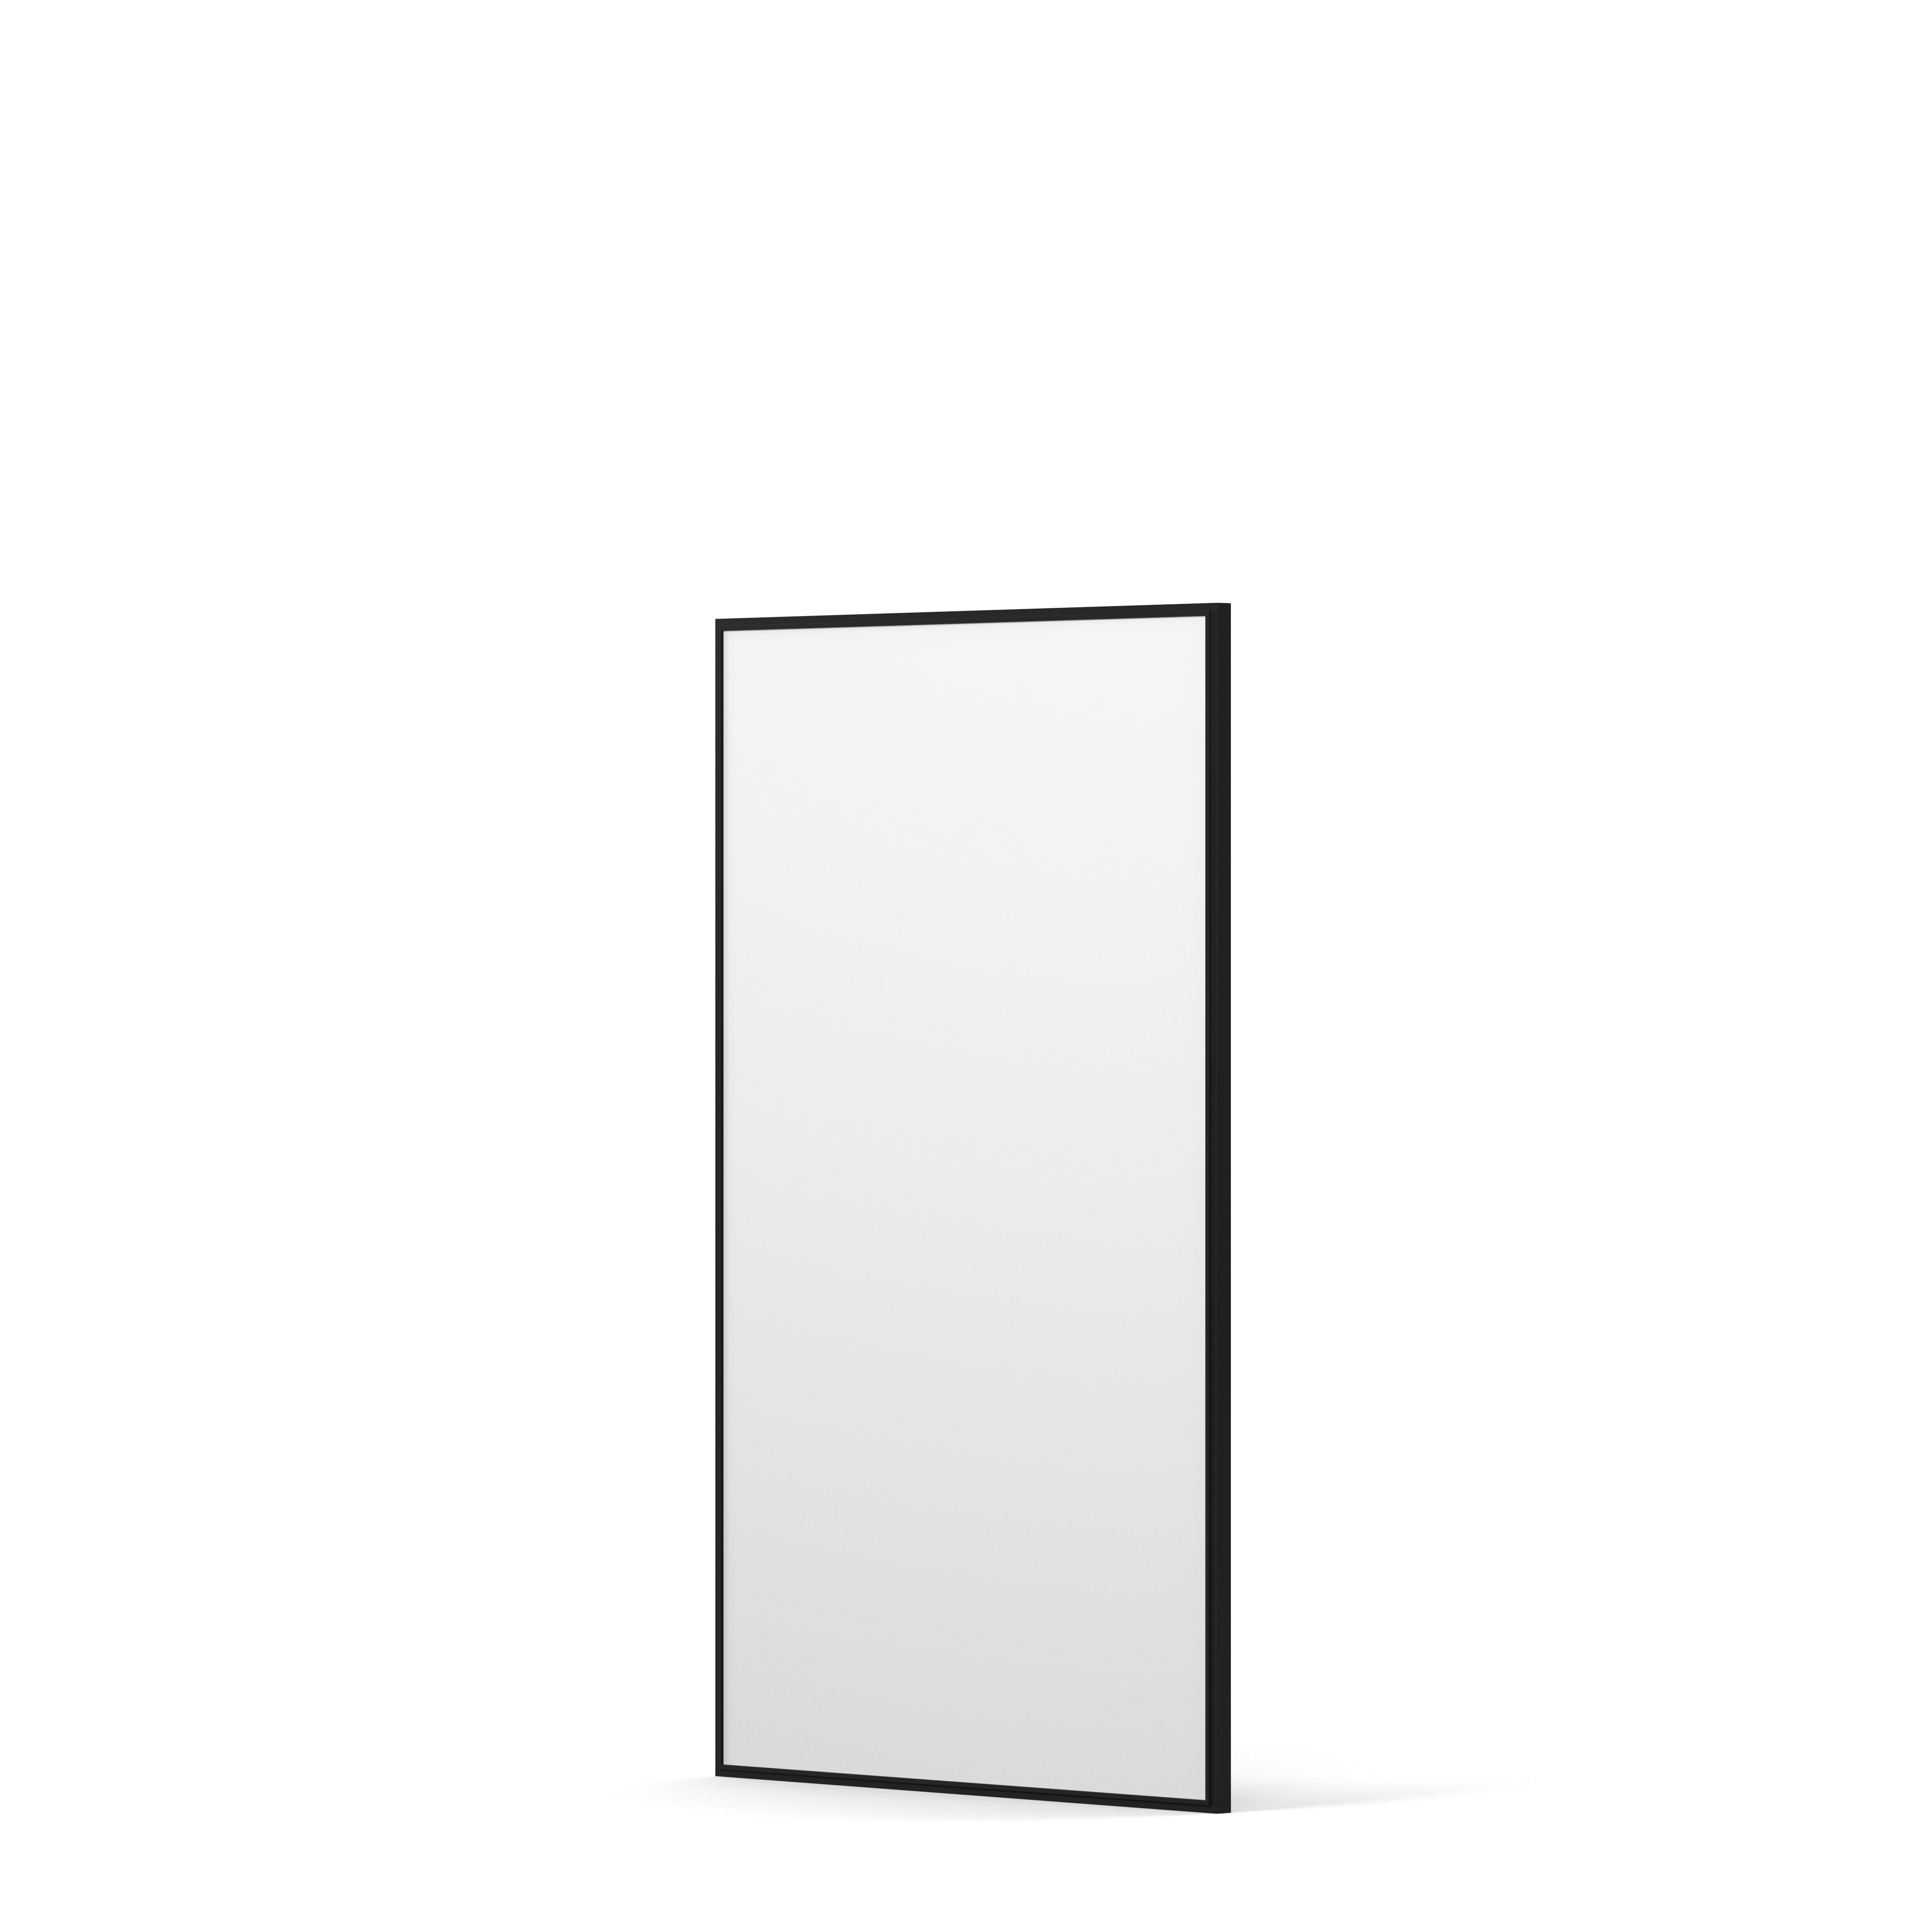 Englesson Cube Spegel Rektangulär #Variant_Edge Black 